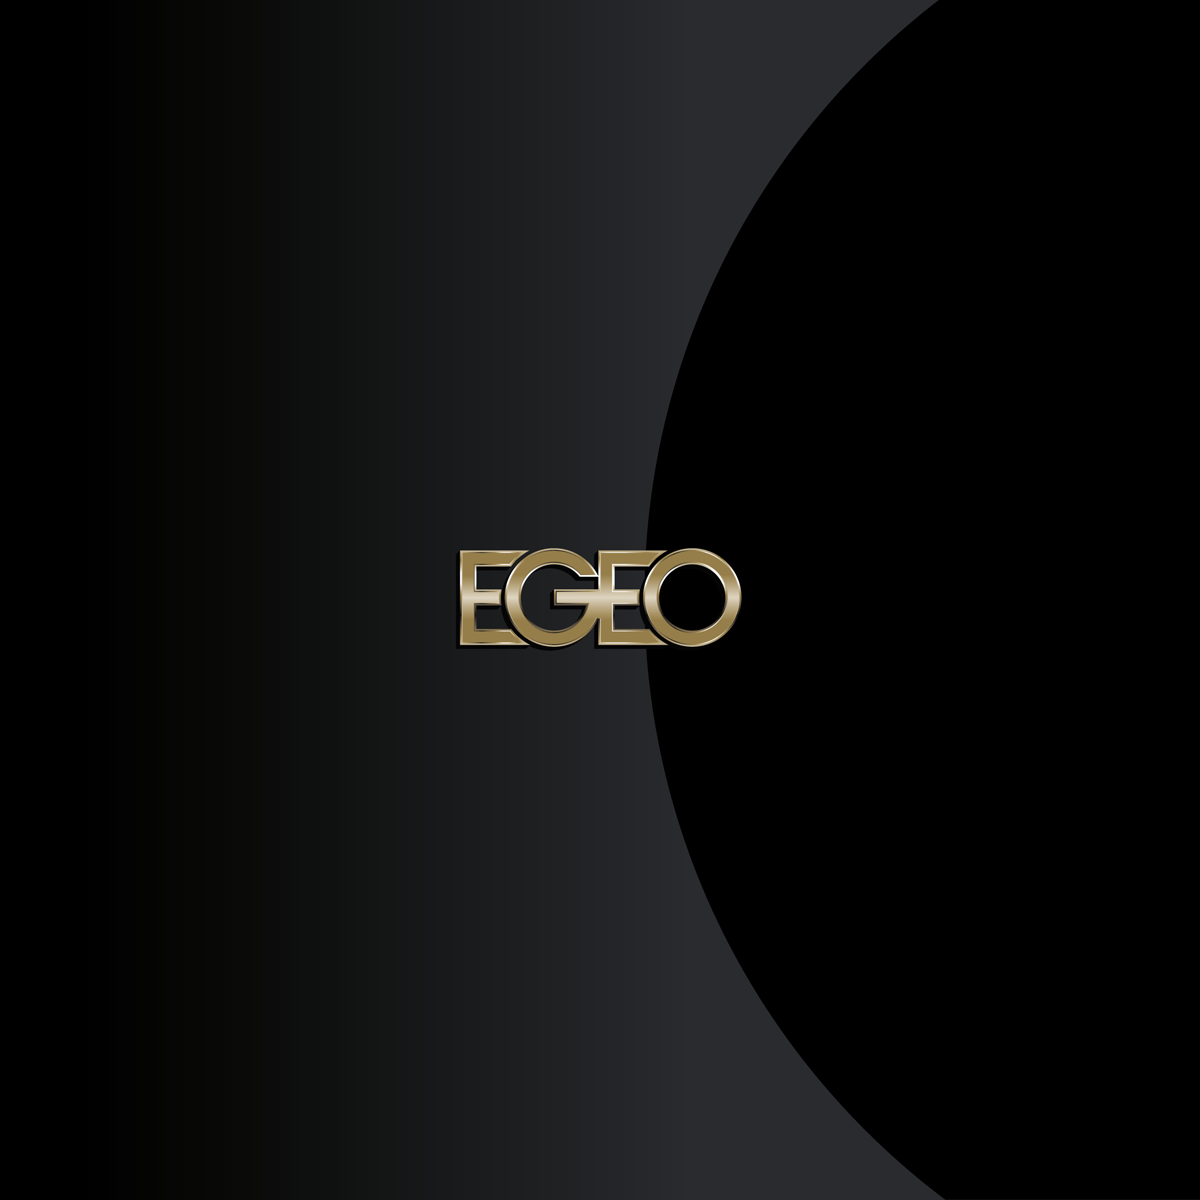 EGEO logo